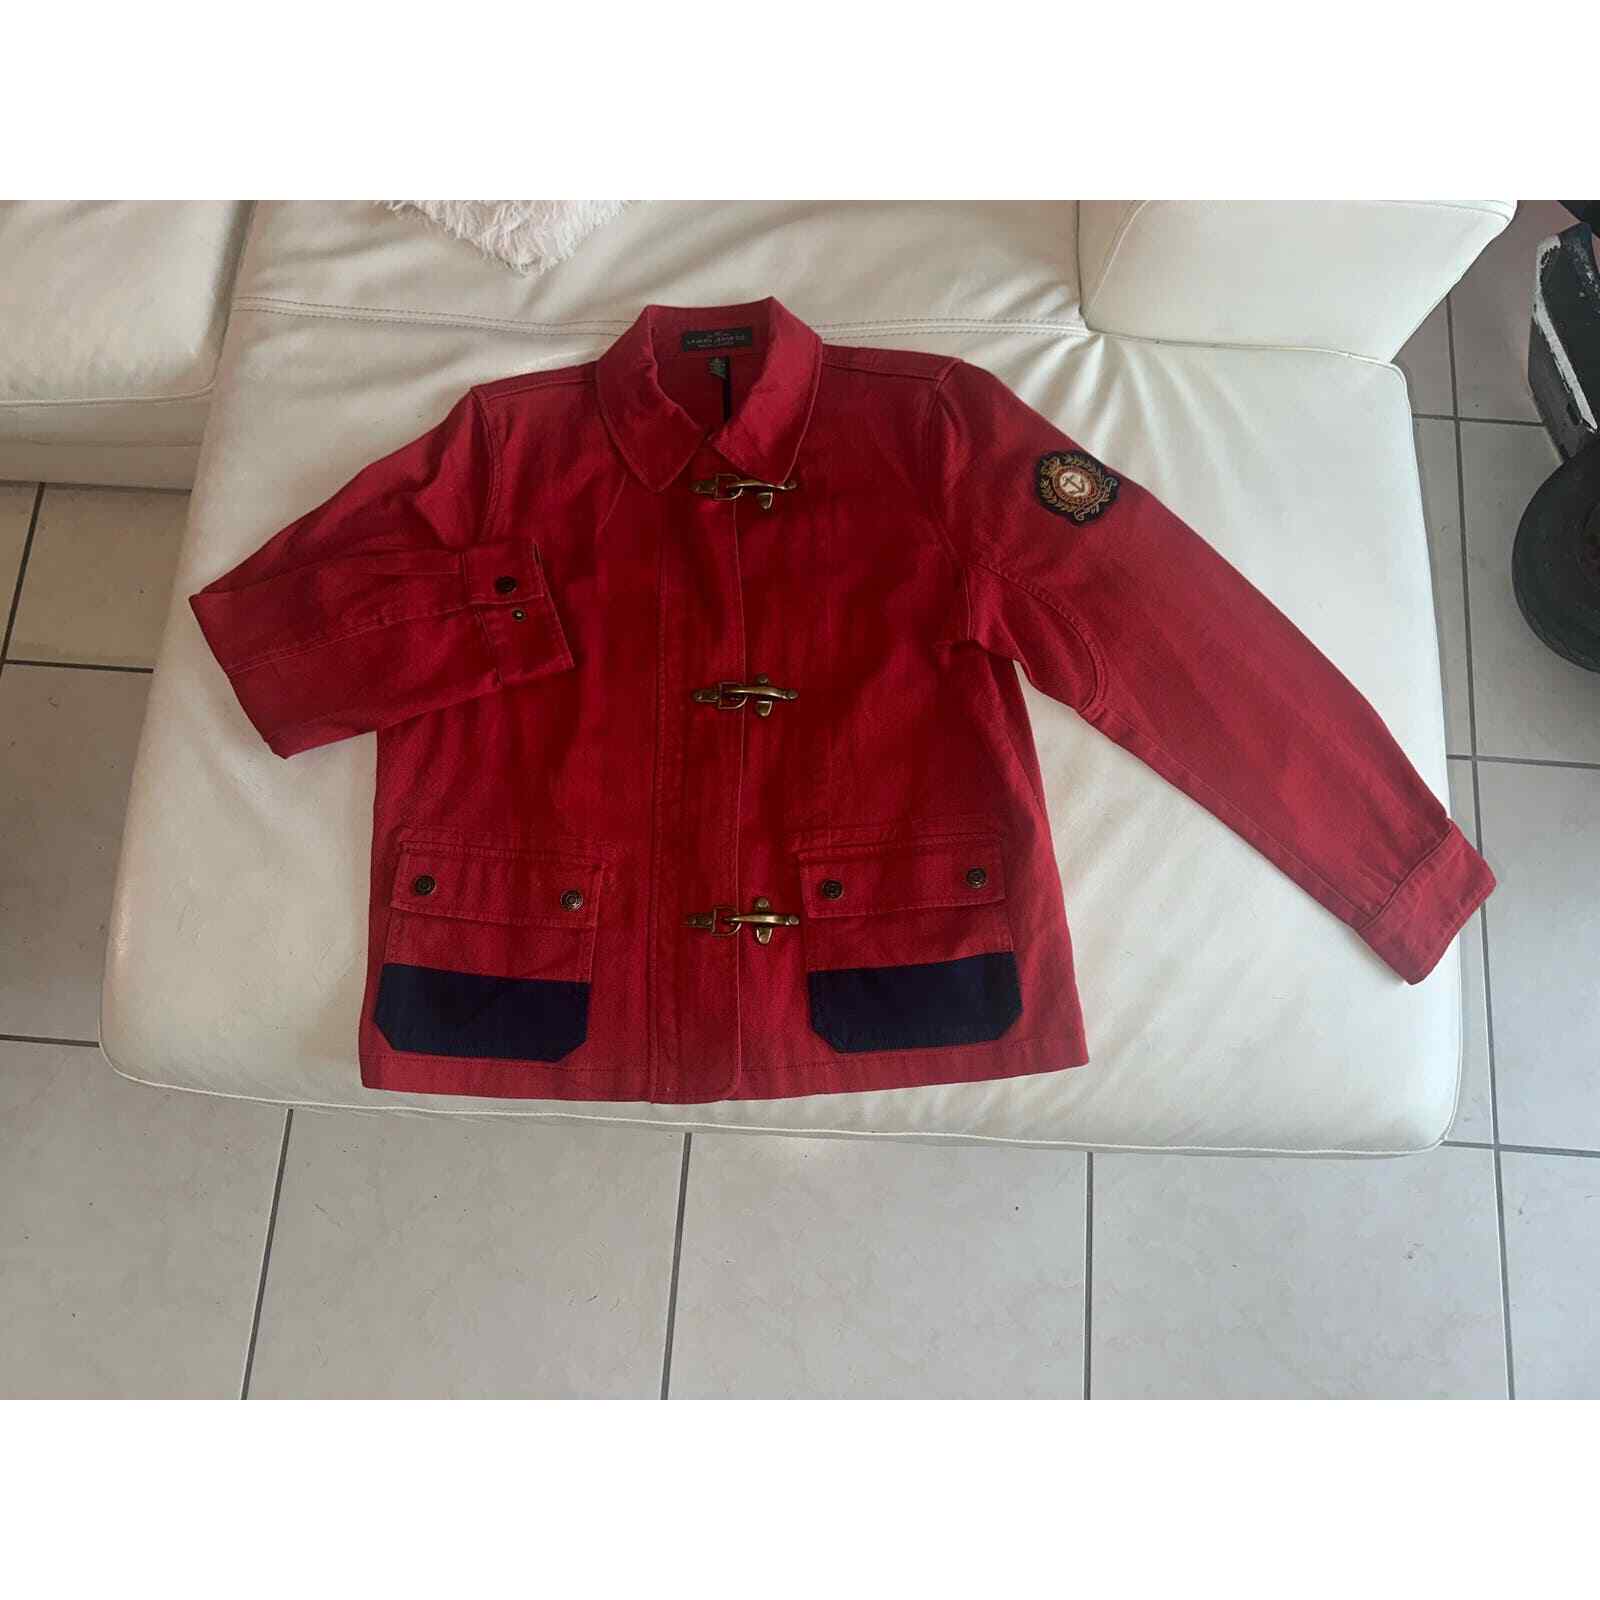 Ralph Lauren Jeans co woman’s barn coat red size XL metal buckles vintage 